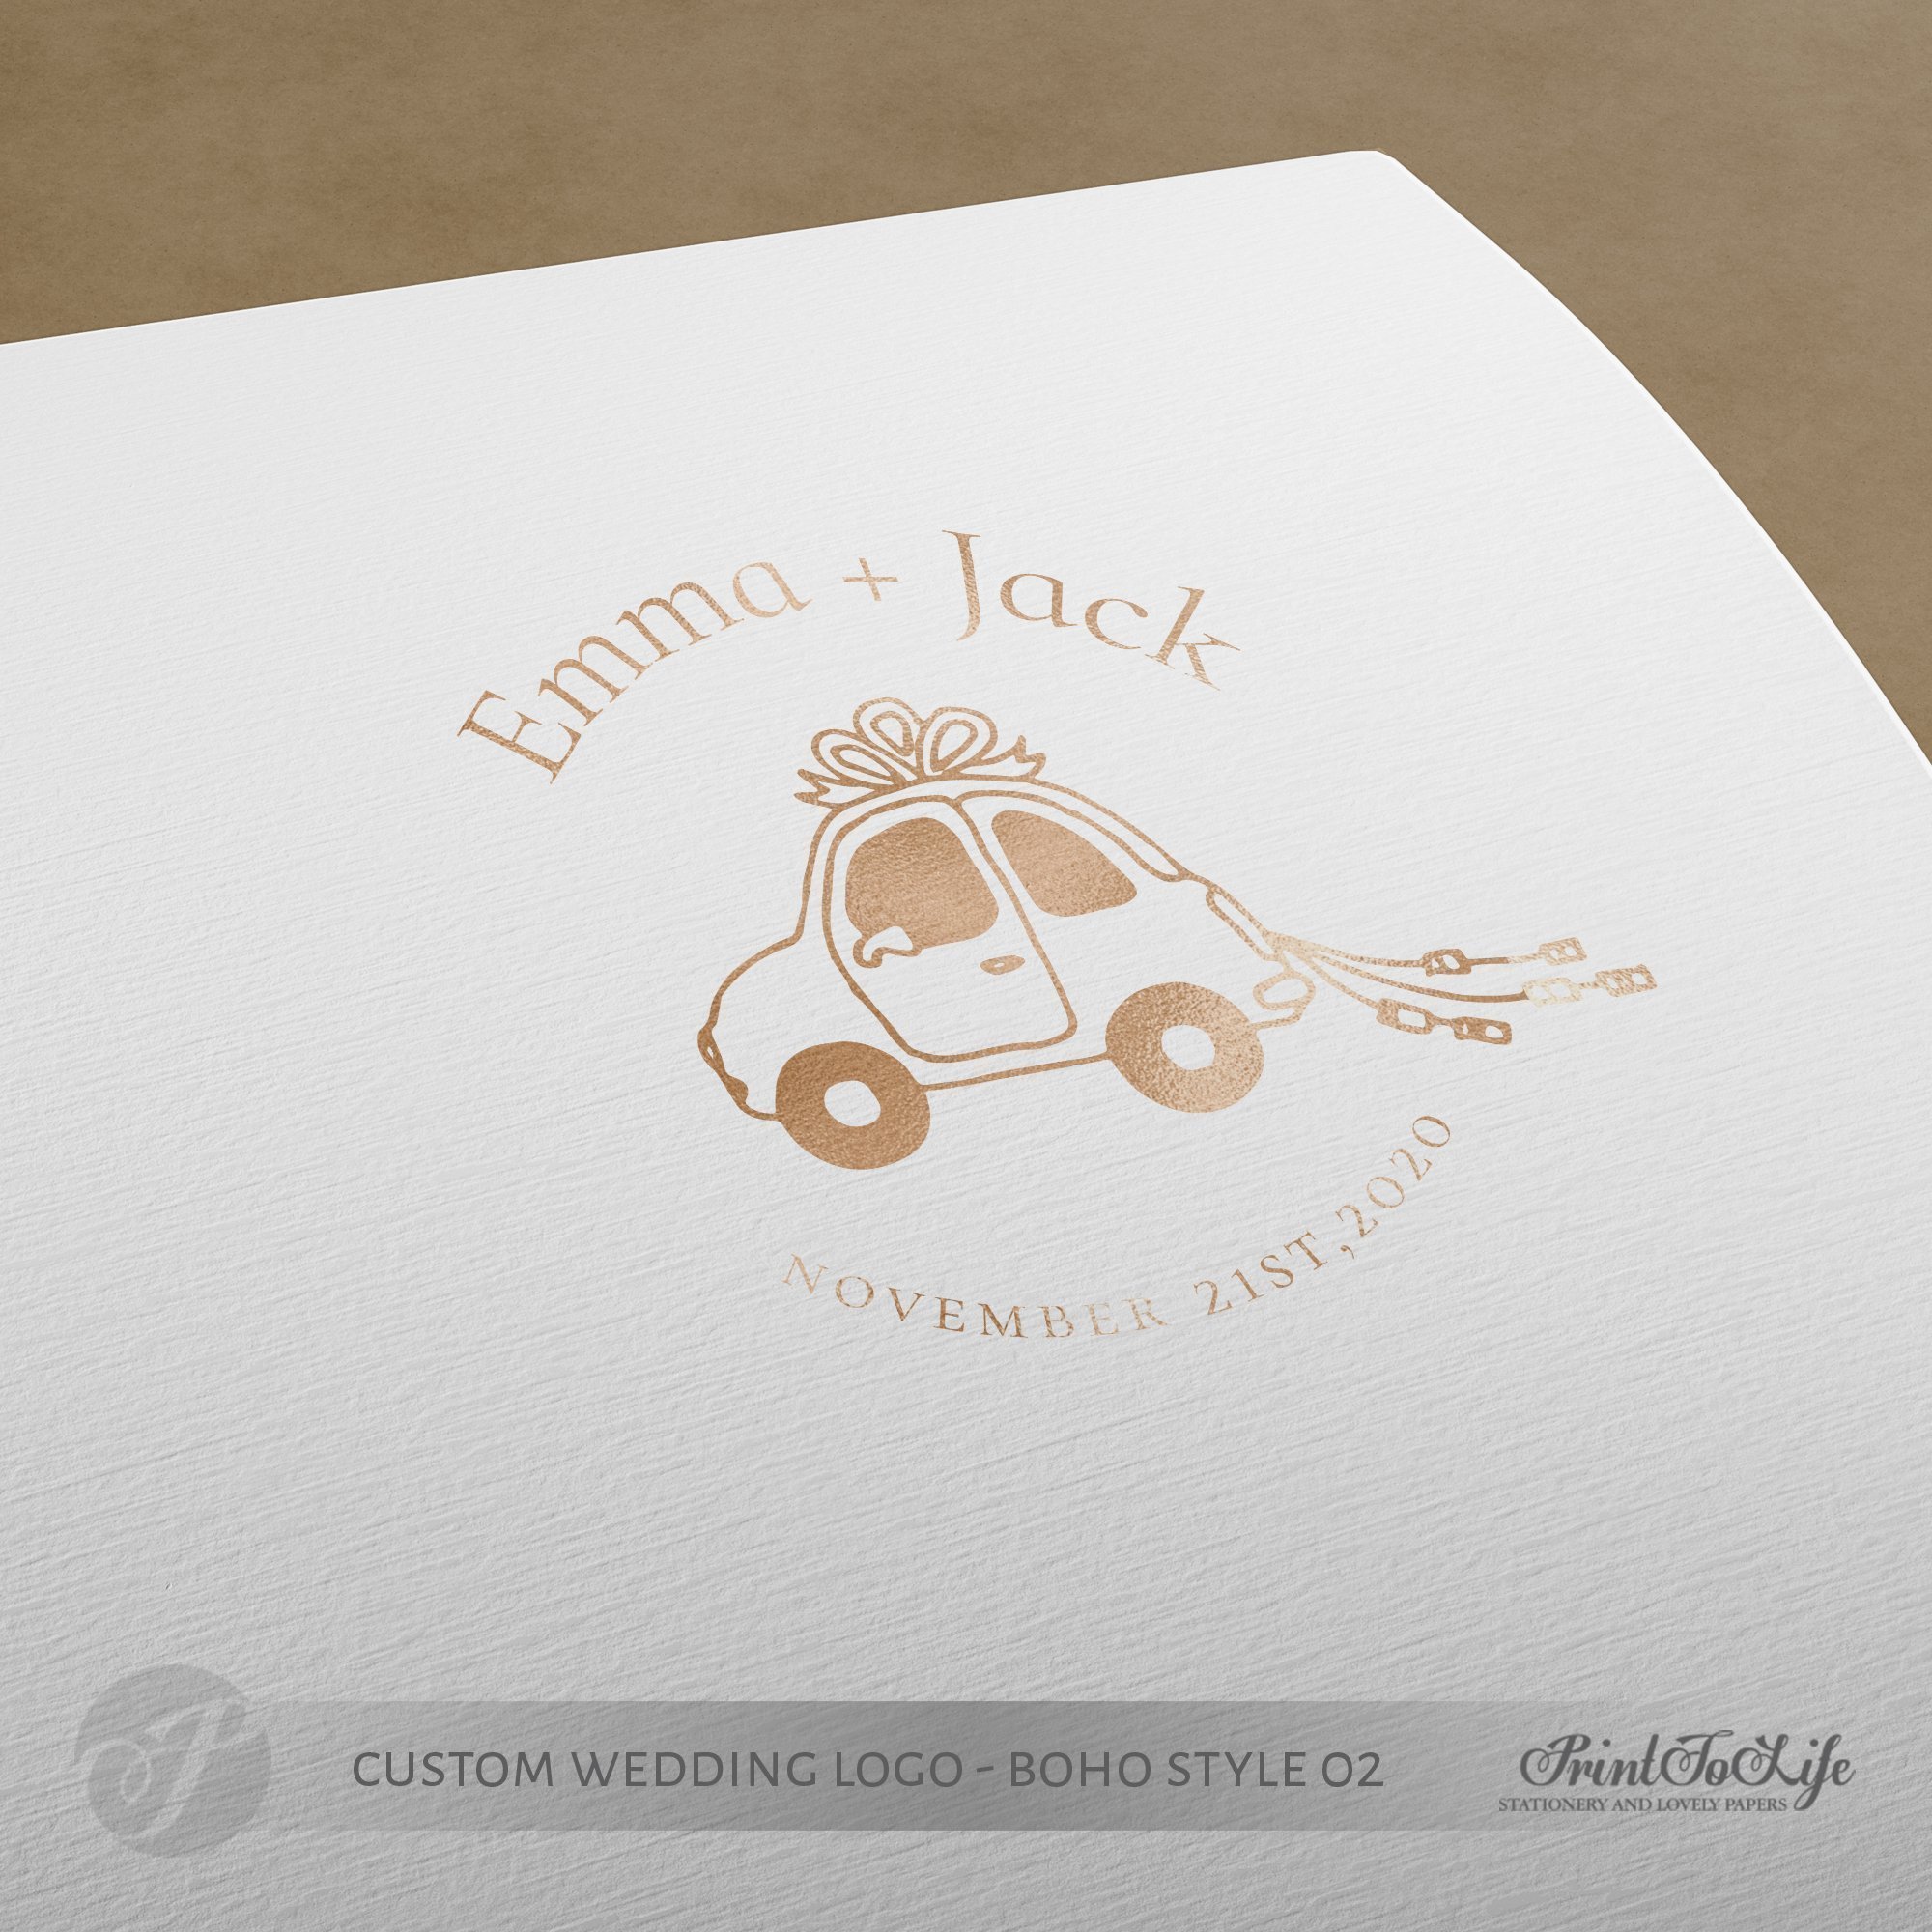 Just married logo, premade logo design, custom stamp logo, wedding car,  boho wedding - by Printolife